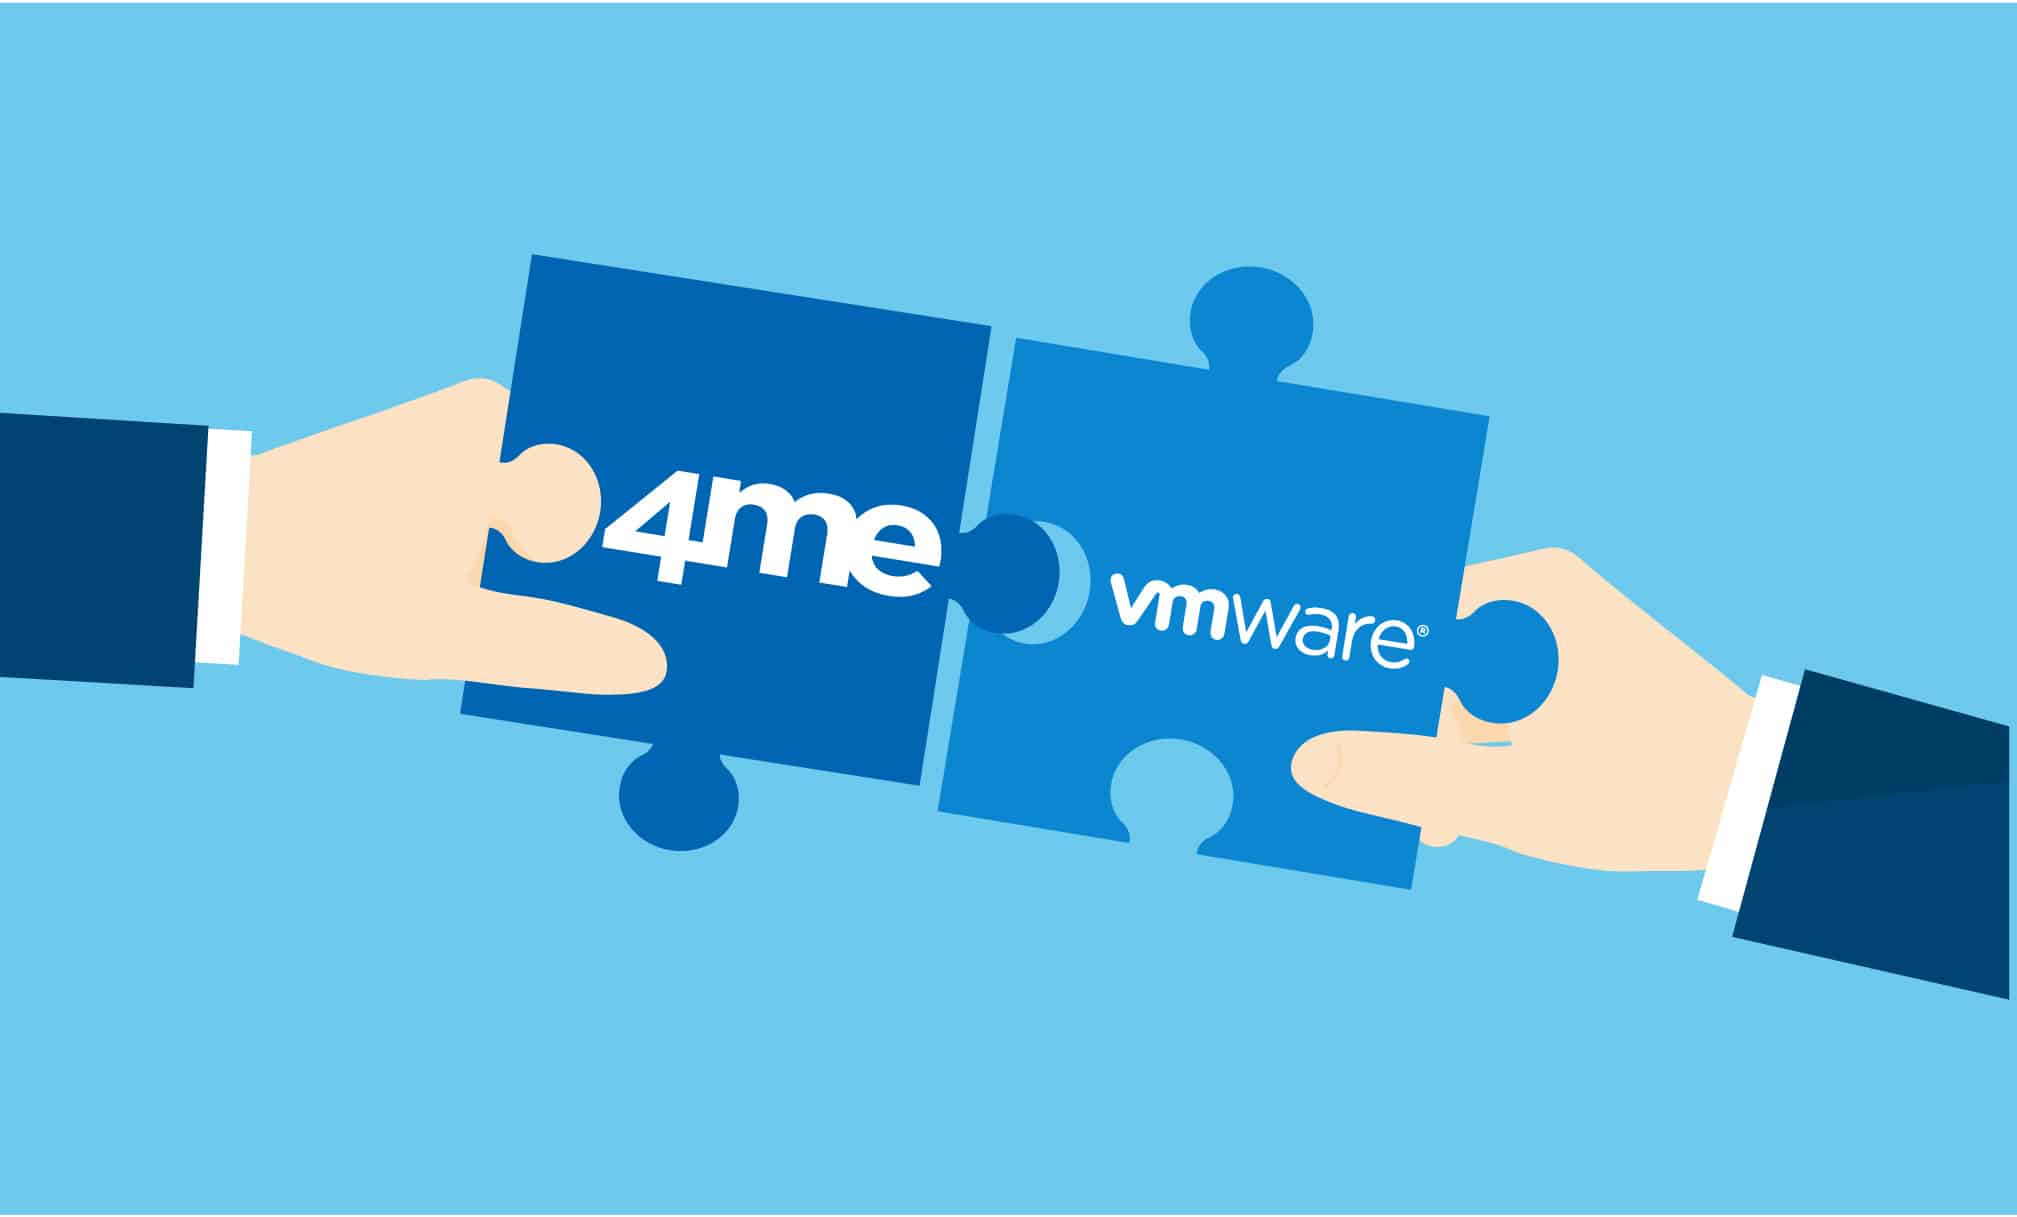 4Me Vmware Integration